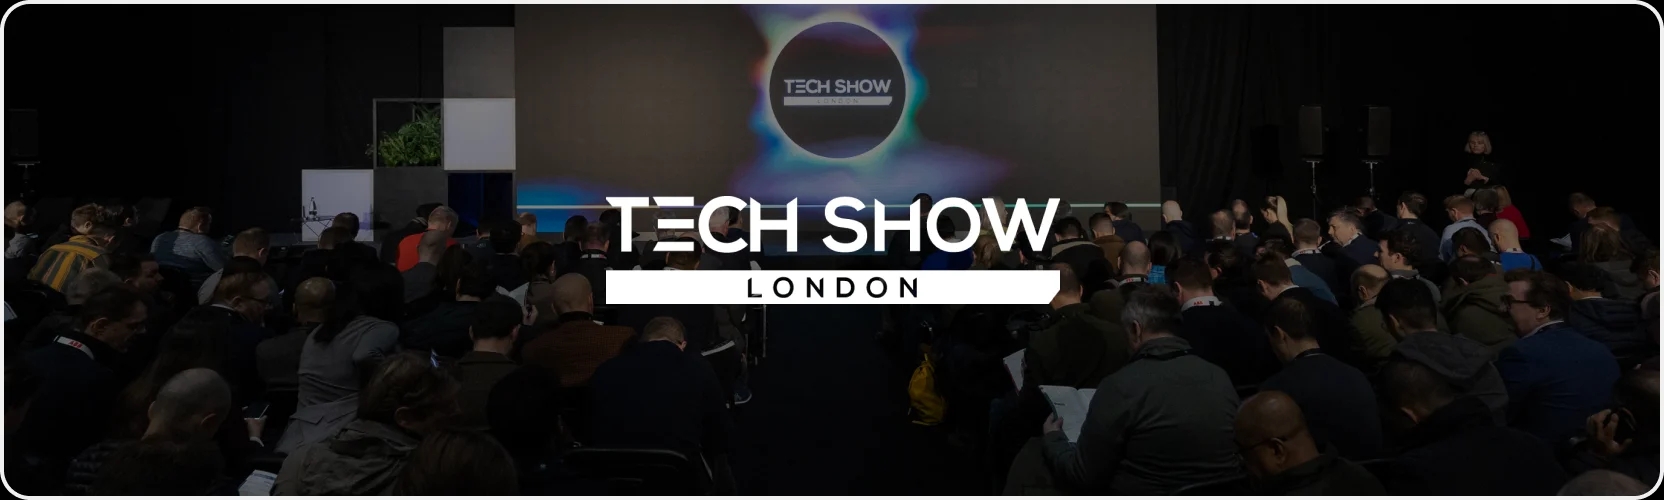 London Tech Show